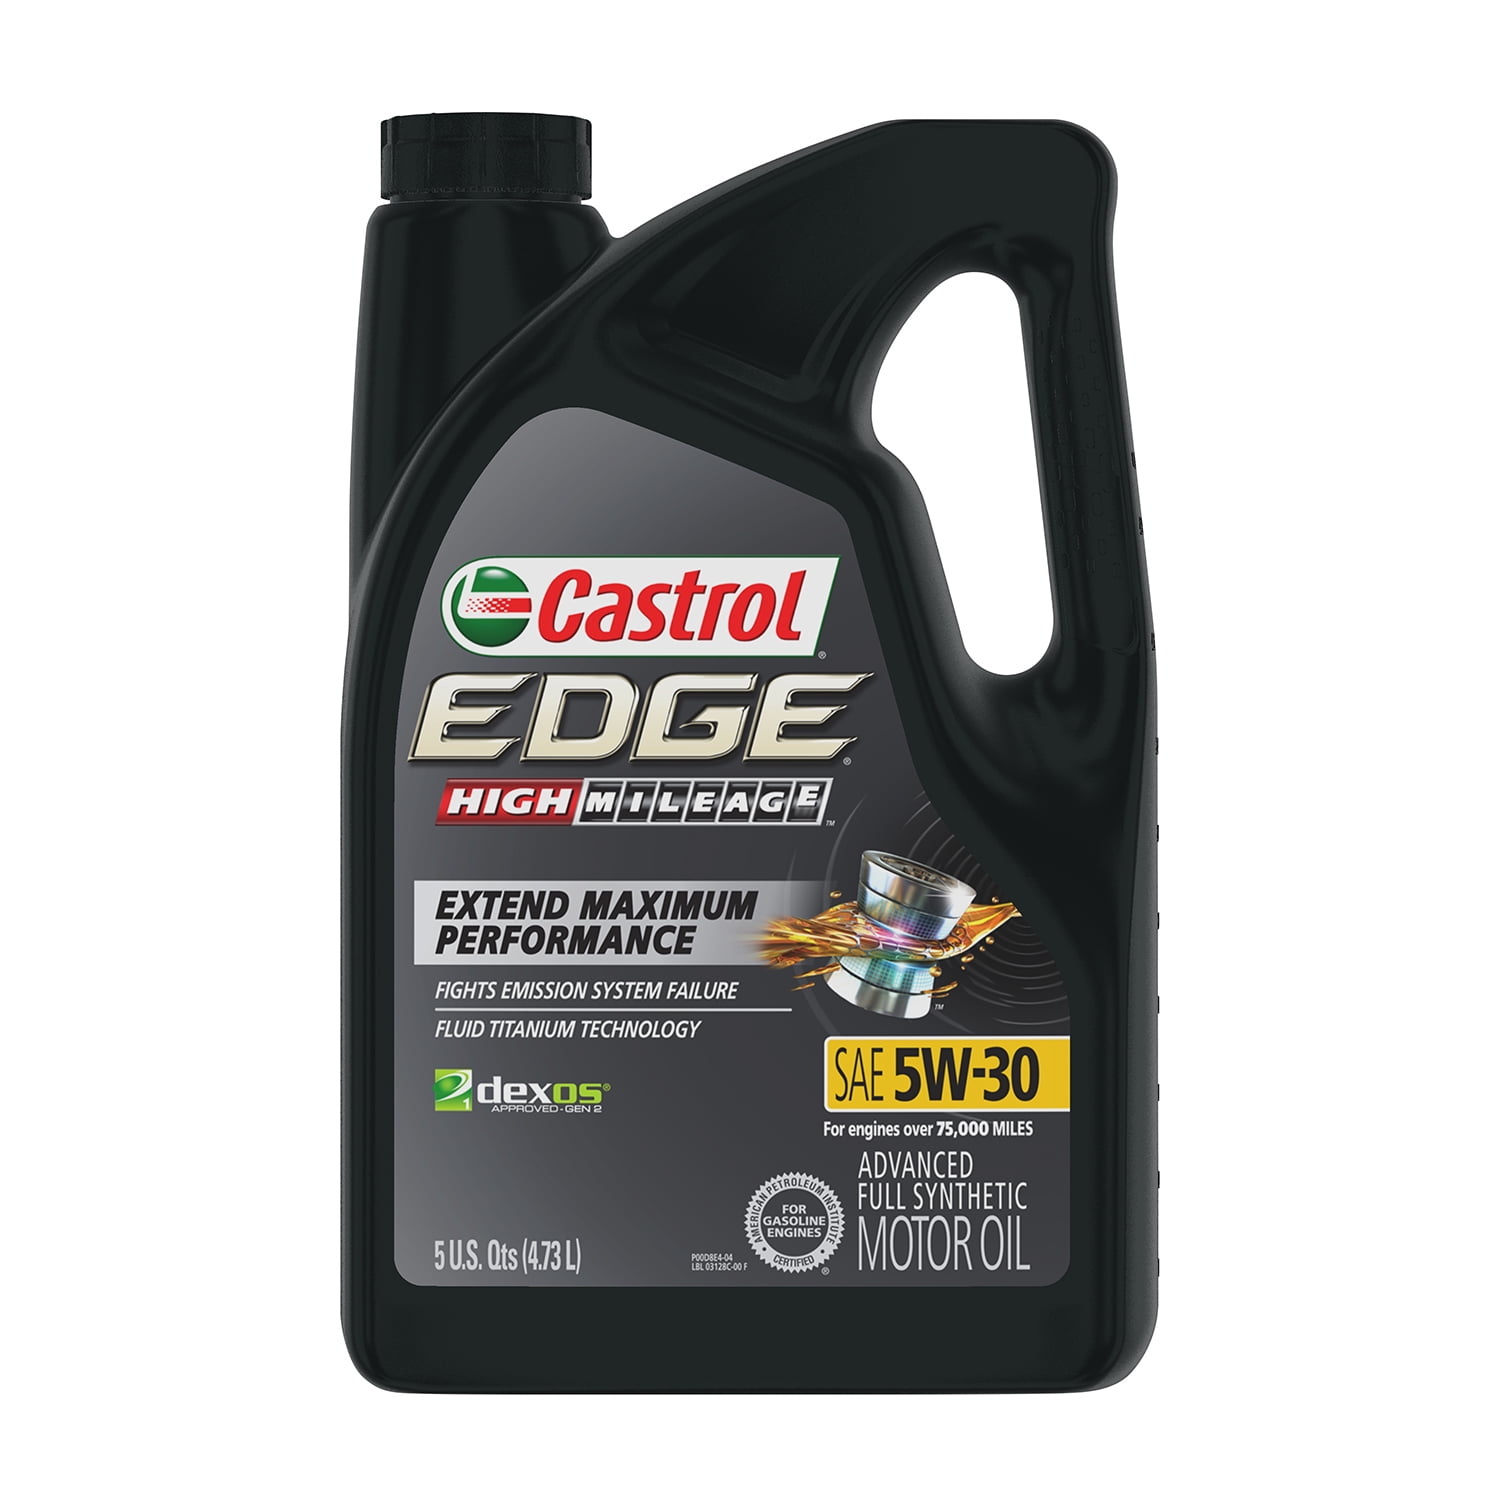 Castrol Edge High Mileage 5W-30 Advanced Full Synthetic Motor Oil, 5 Quarts